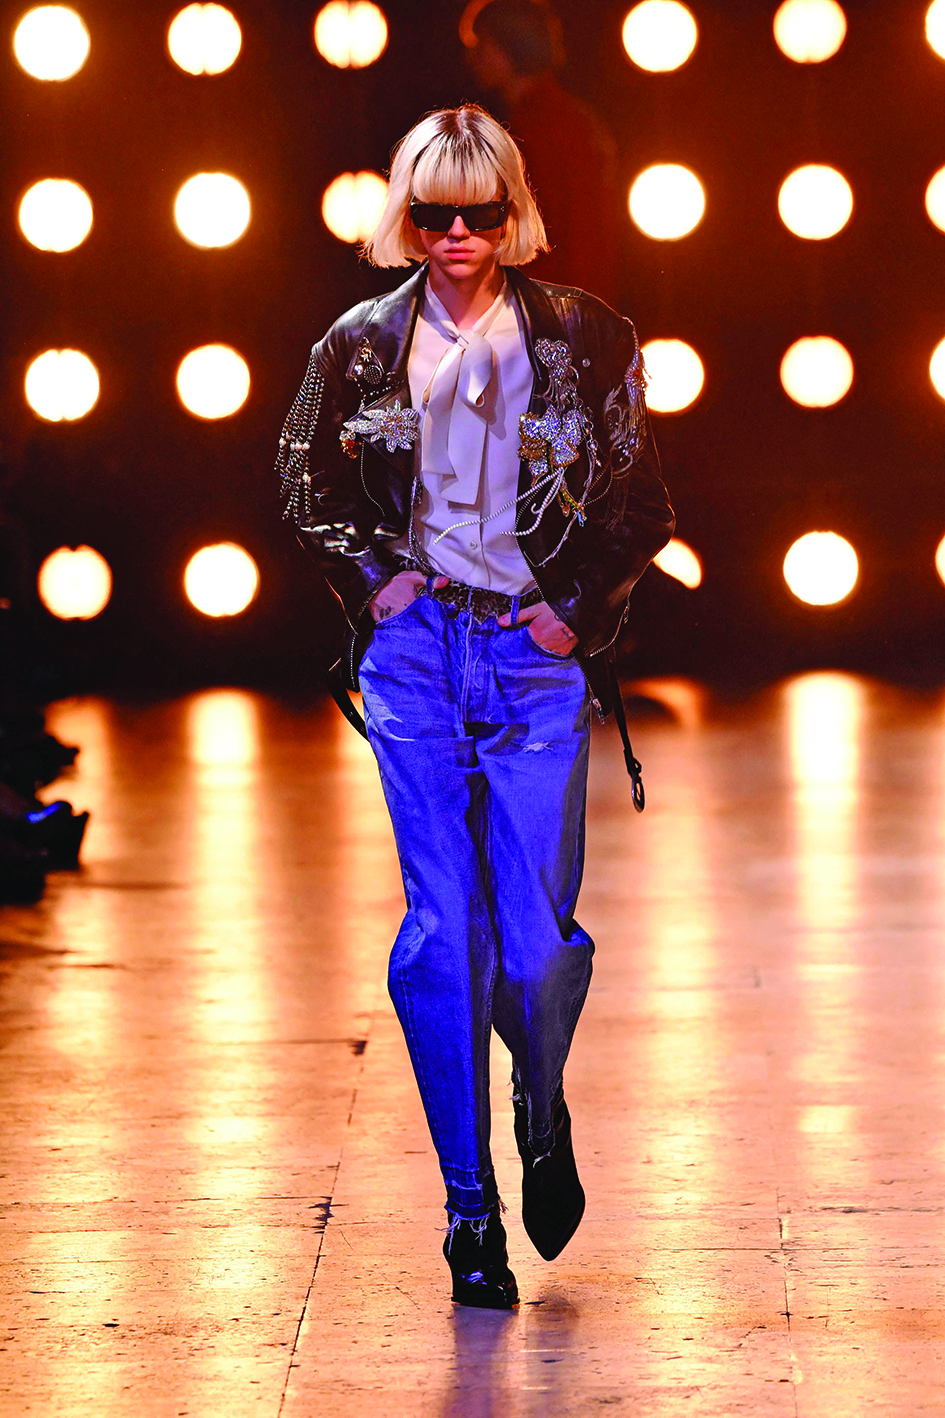 Menswear regains its muscle at Paris Fashion Week